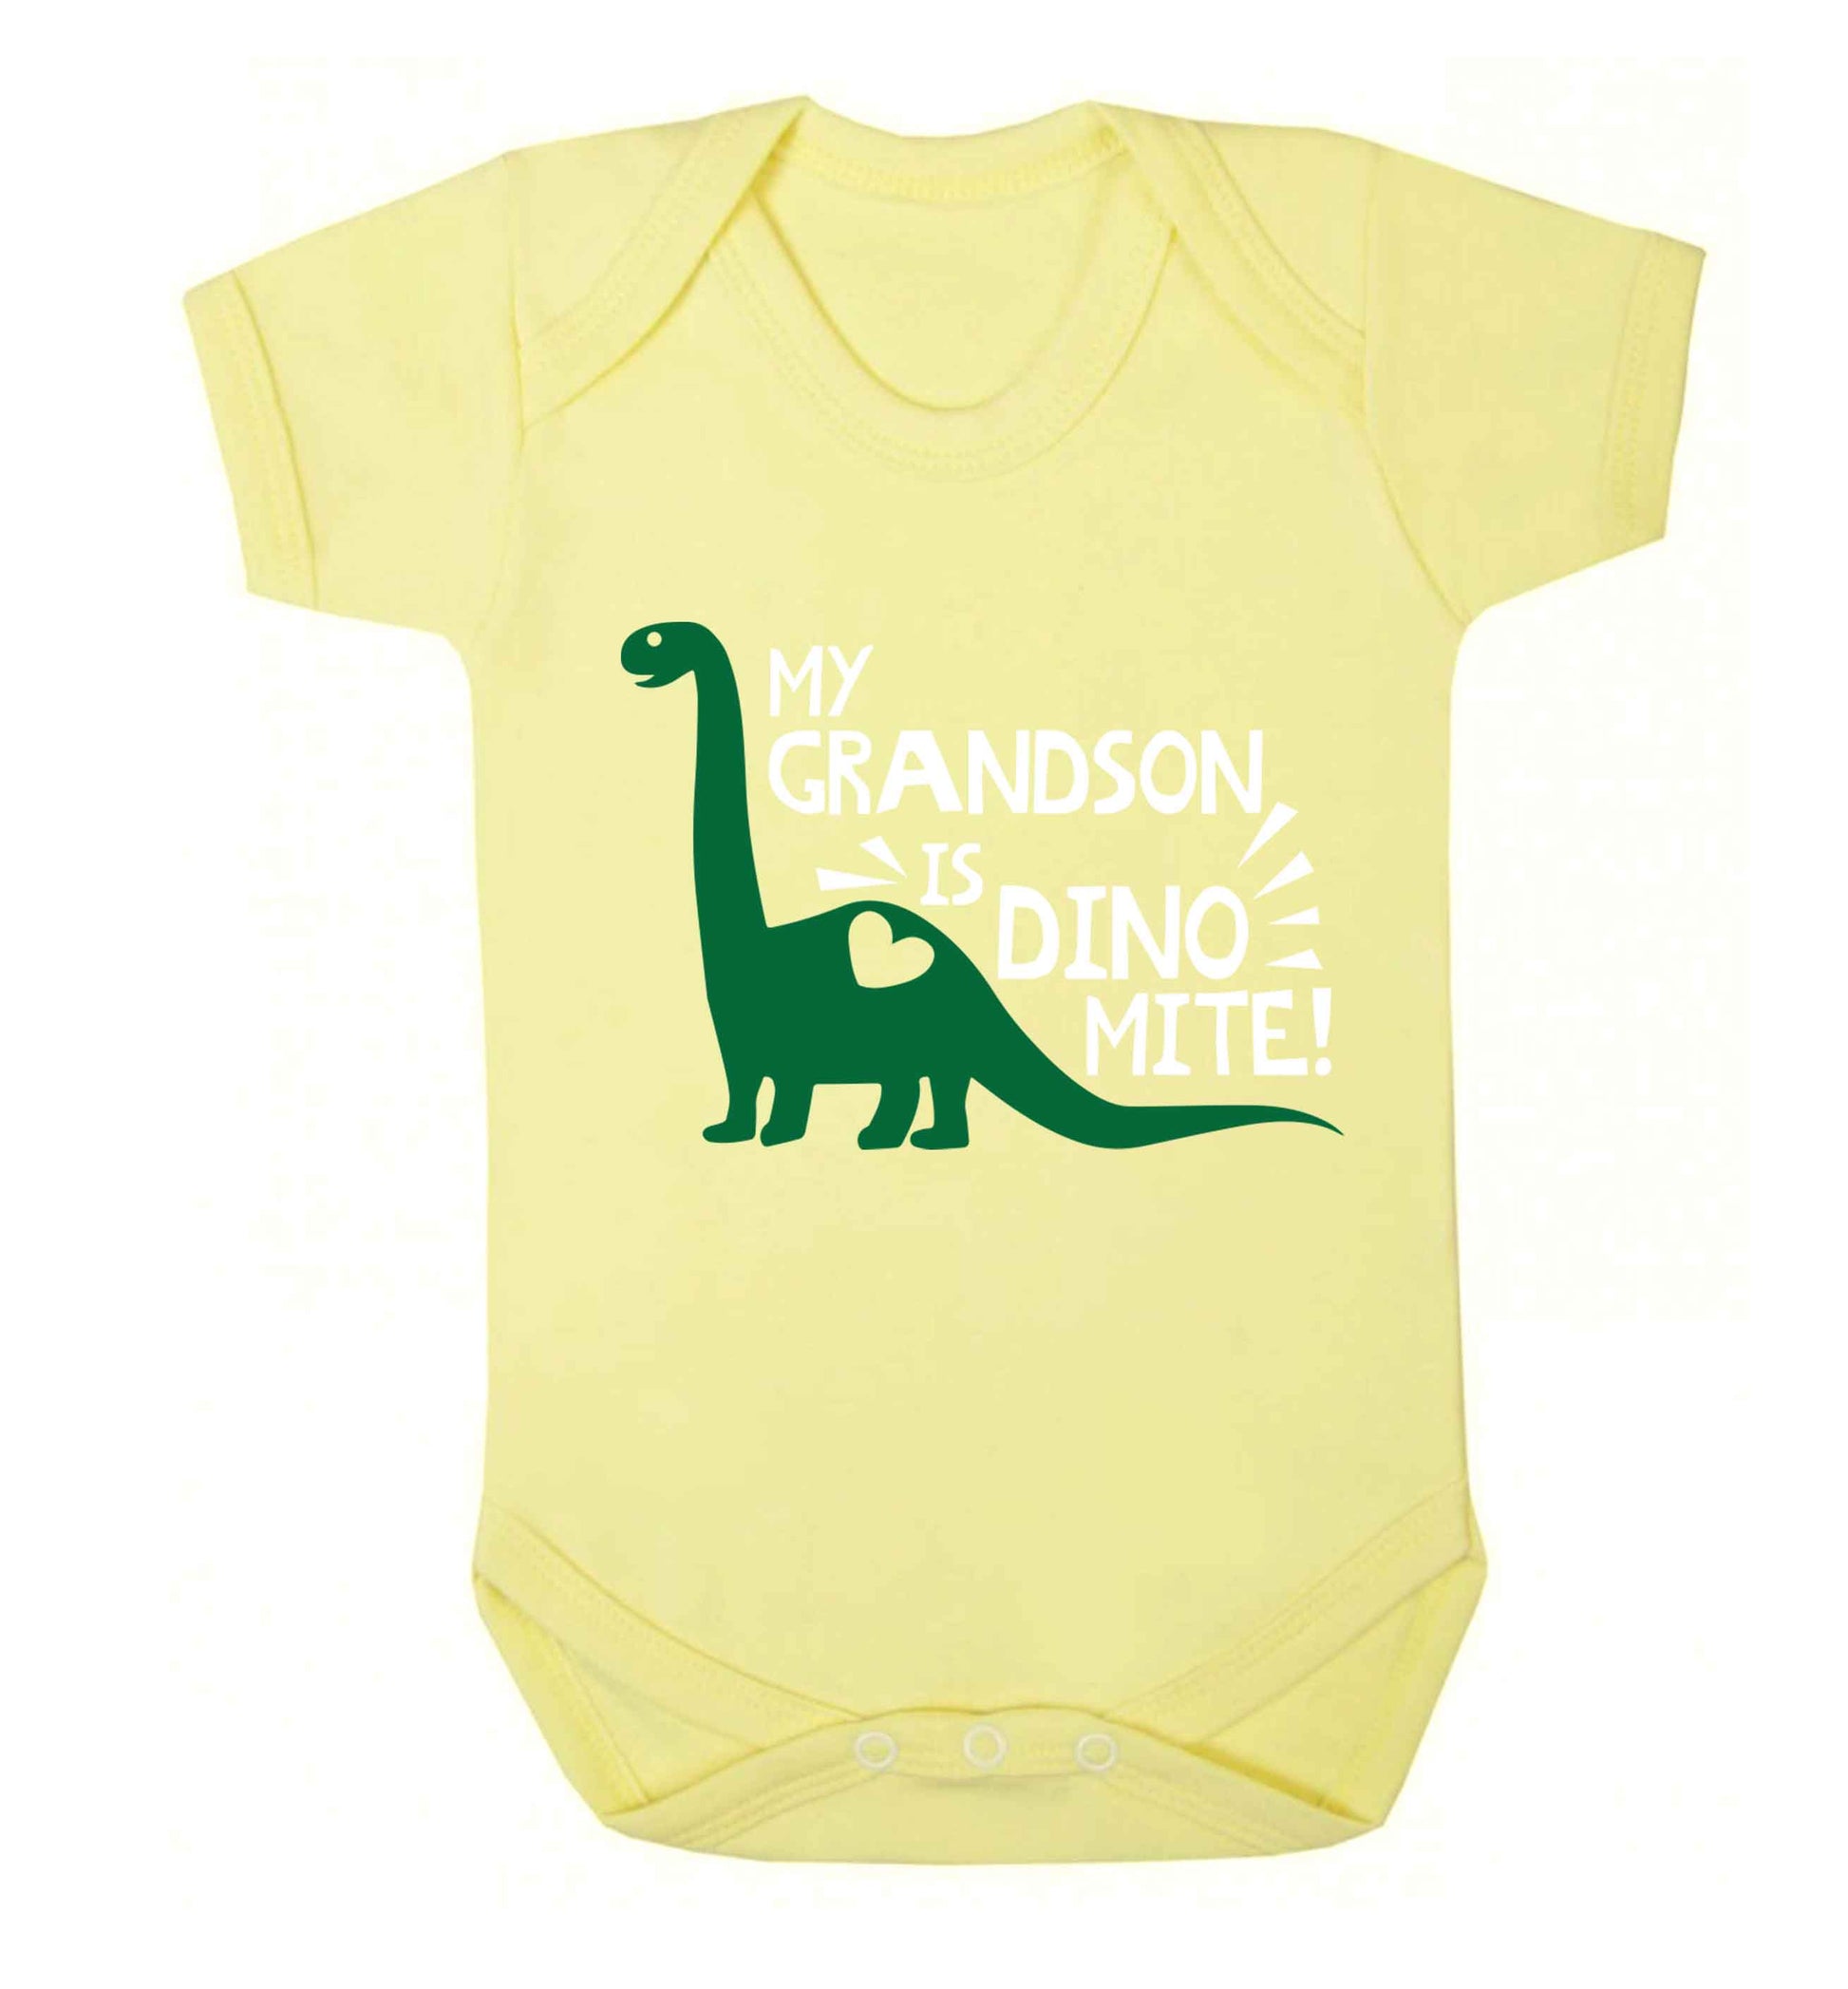 My grandson is dinomite! Baby Vest pale yellow 18-24 months